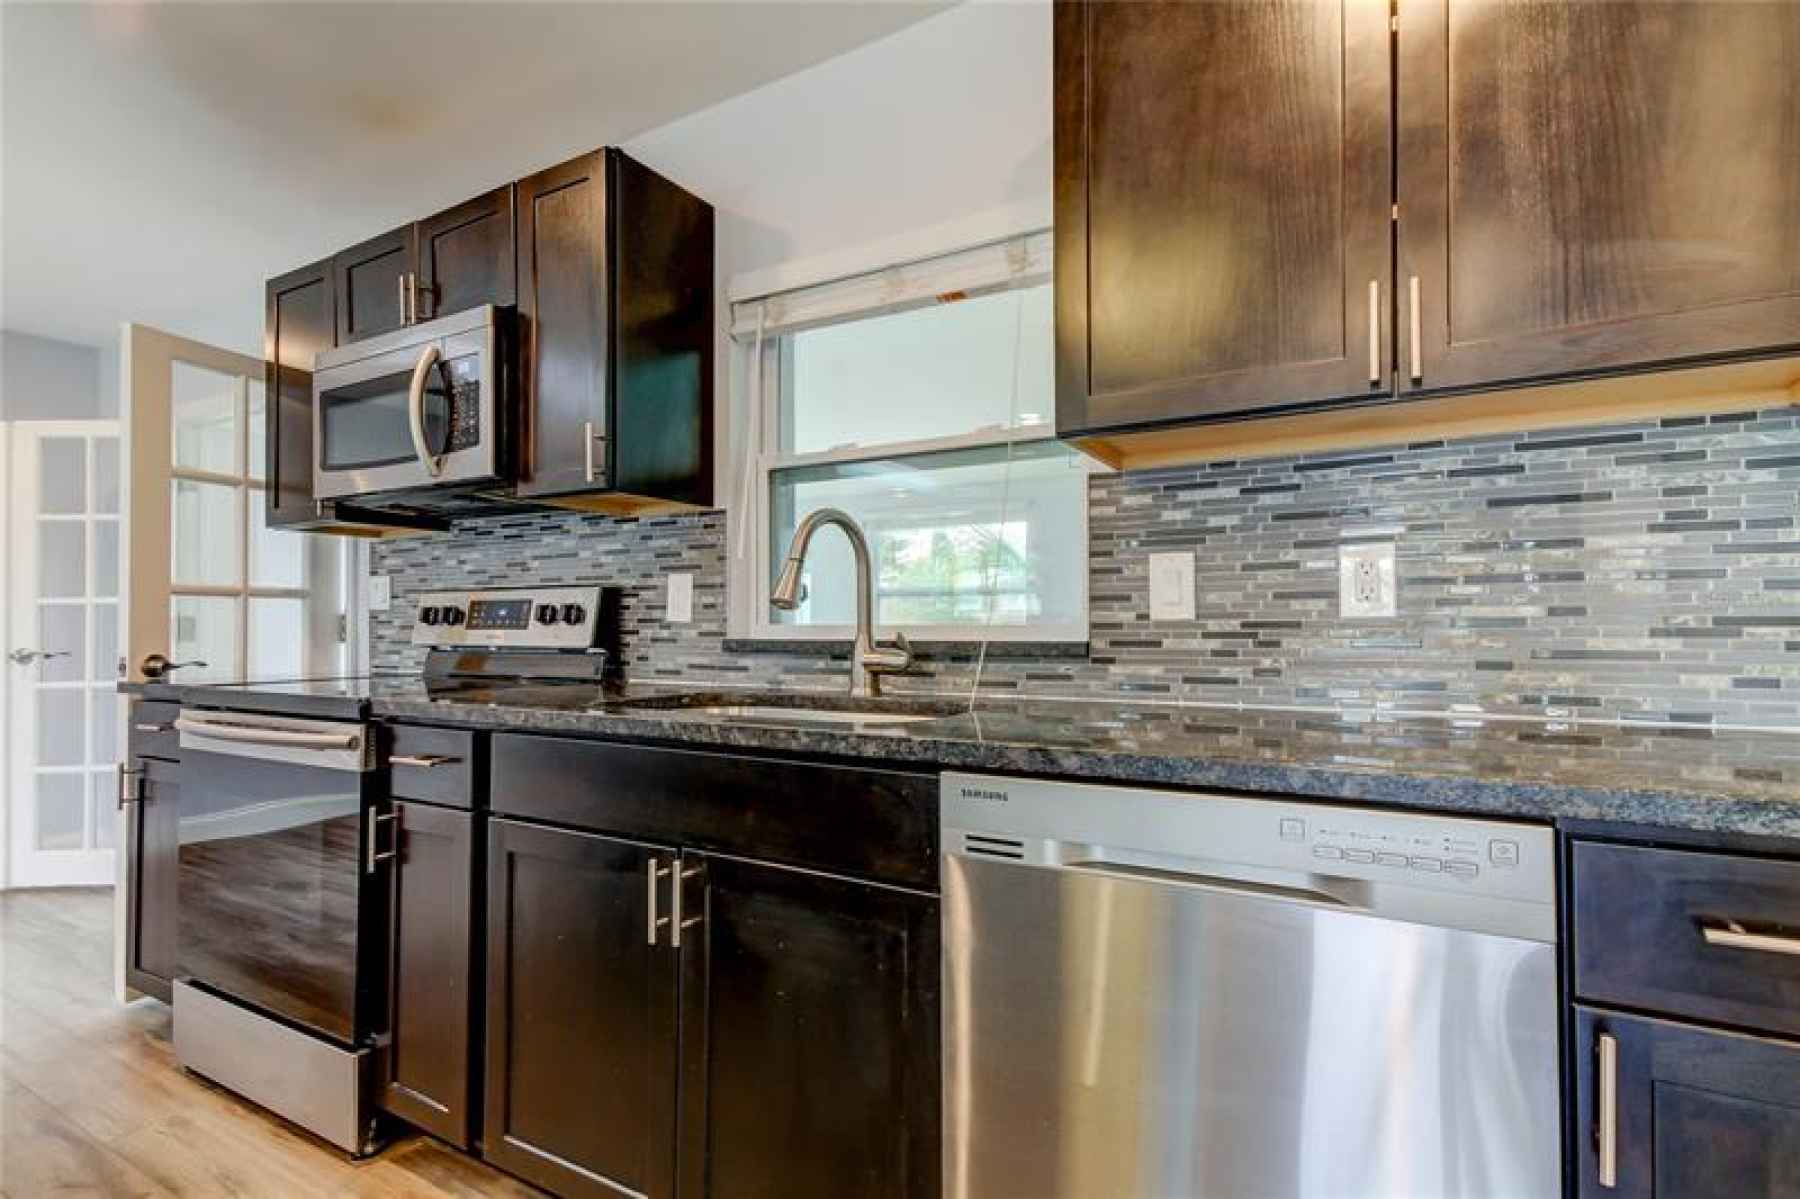 Open Kitchen with newer appliances, Tiled backsplash